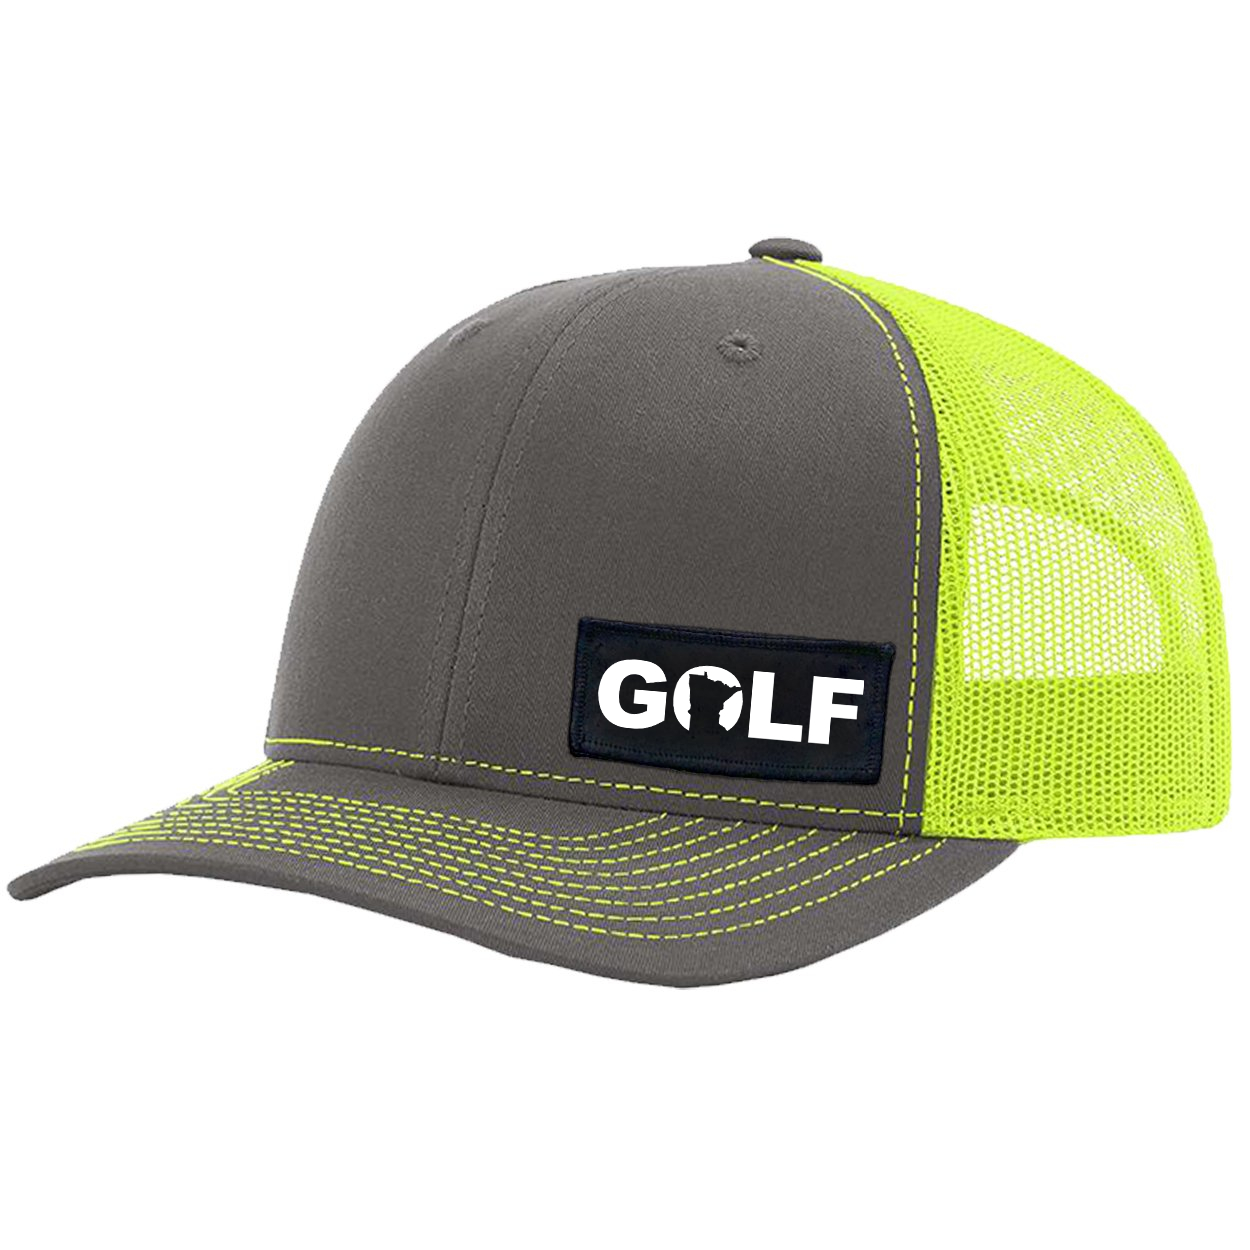 Golf Minnesota Night Out Woven Patch Snapback Trucker Hat Gray/Neon Yellow (White Logo)